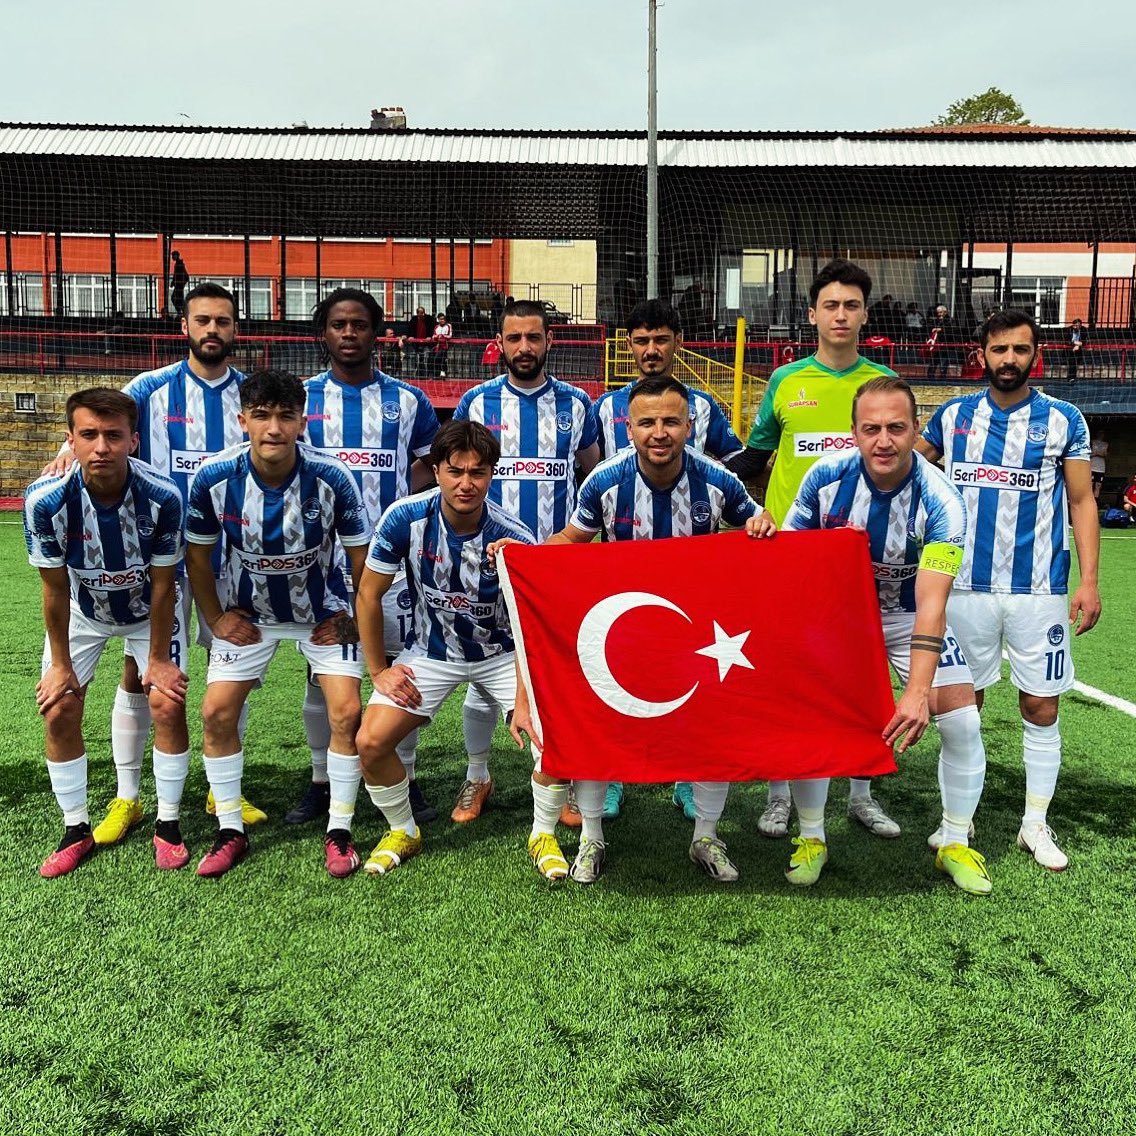 MS | Küçüksu Rasathane Spor-3-1-Poyrazköy Gençlikeli

⚽️Serhat Kardaş
⚽️Emre Durmuş
⚽️Muhammed Kaya